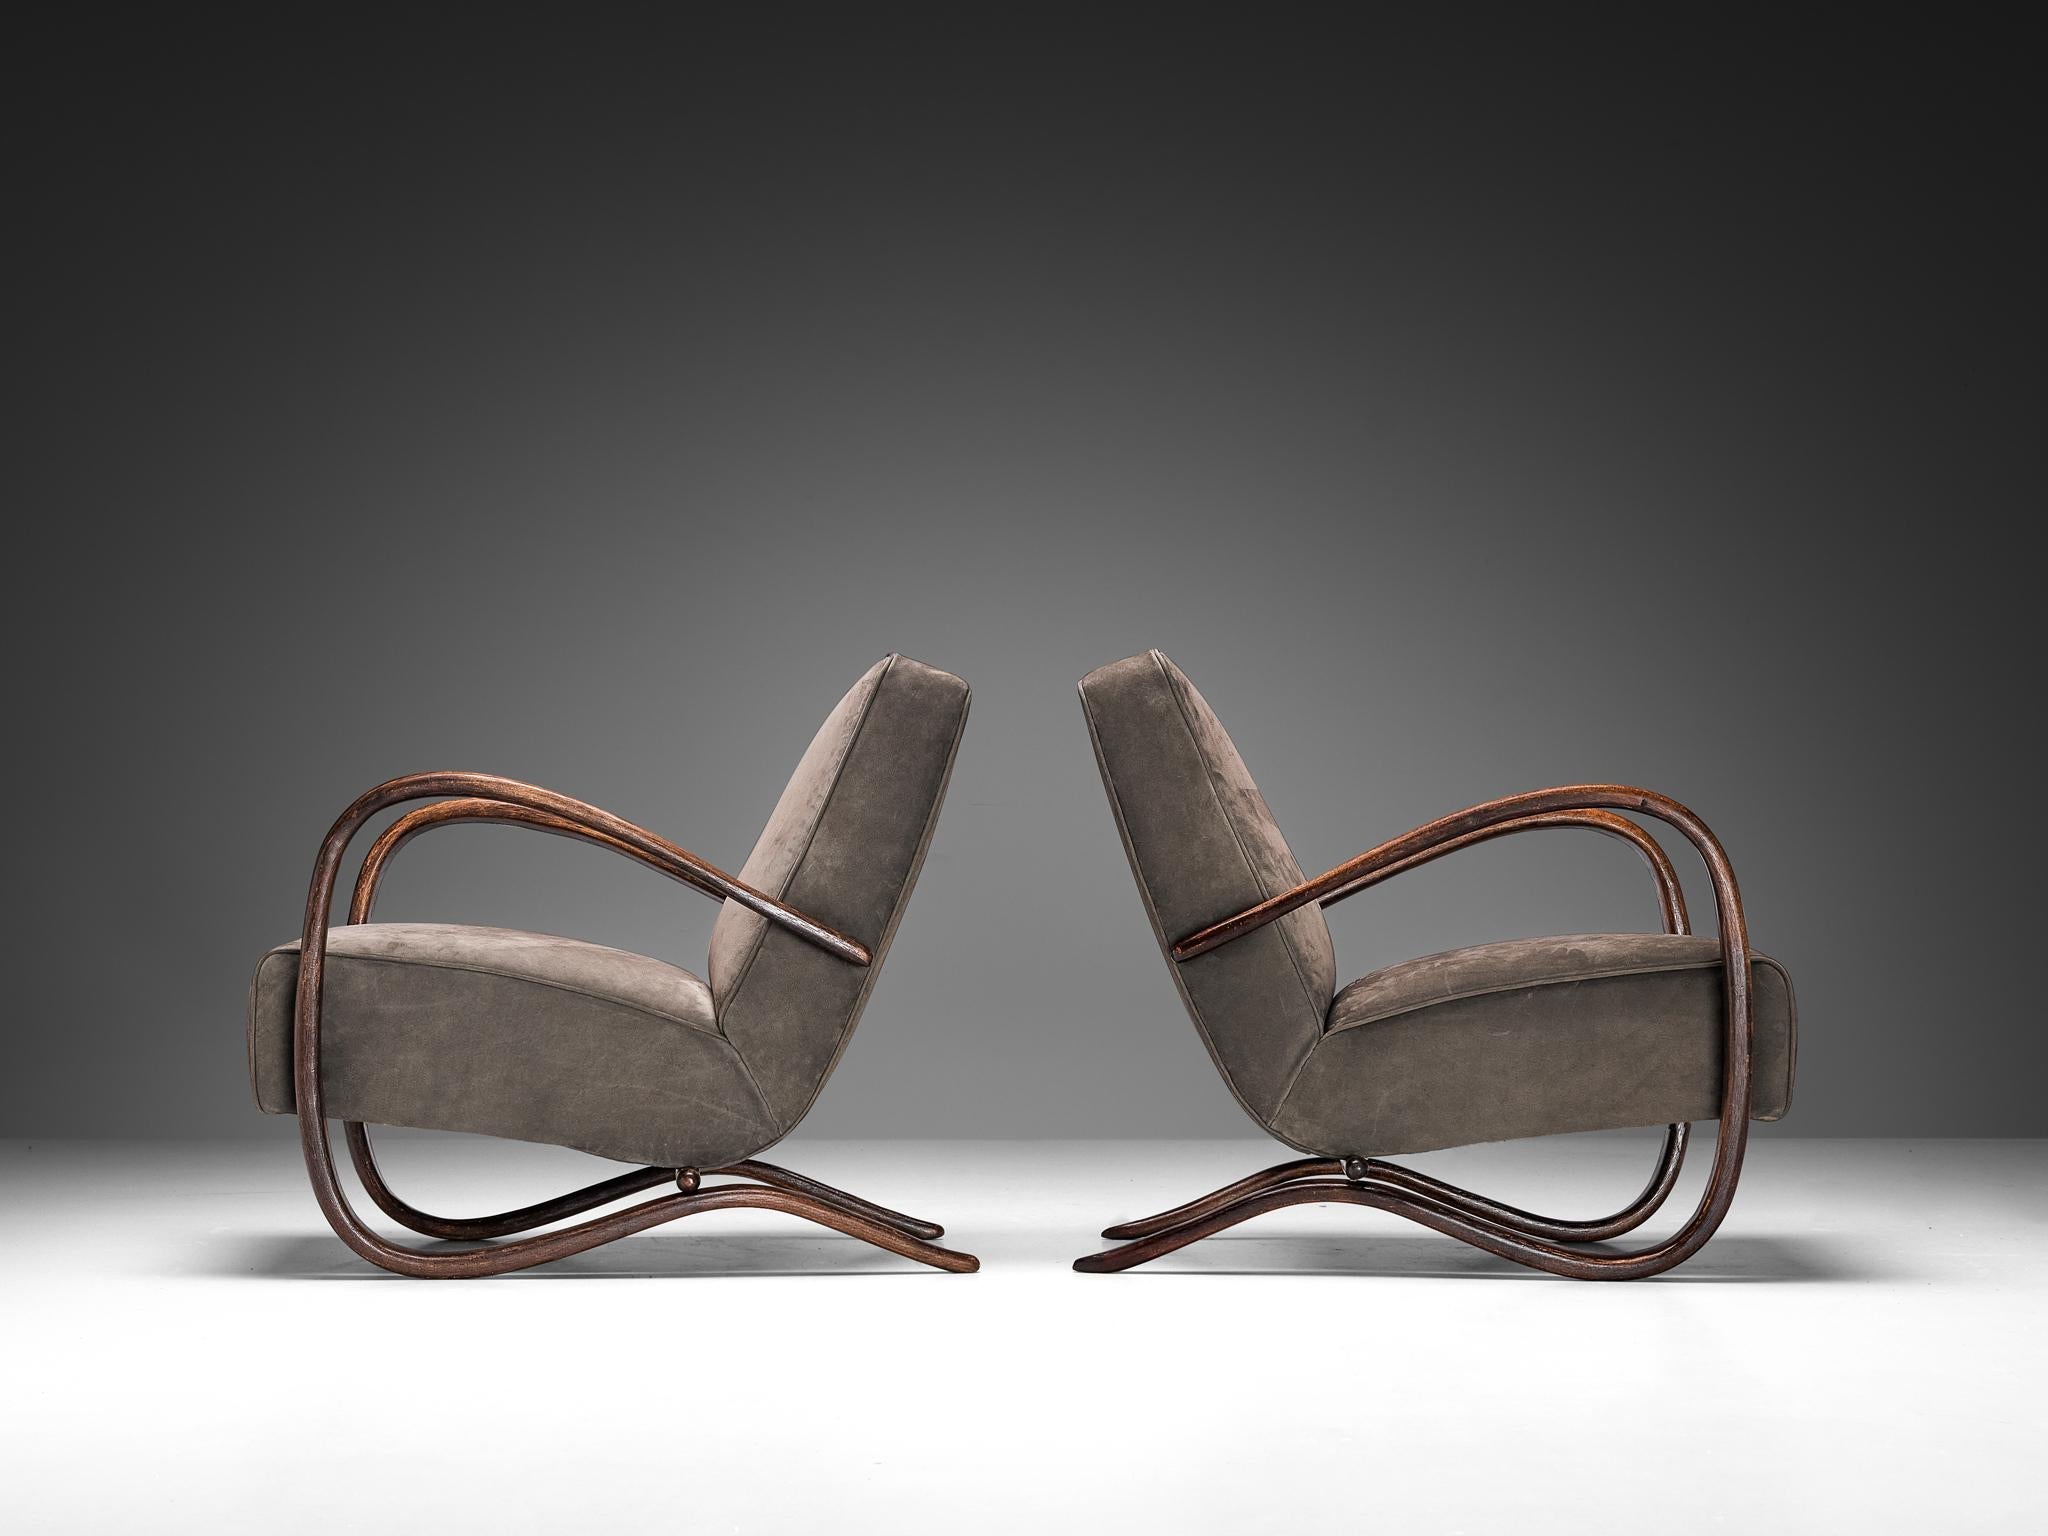 Jindrich Halabala Lounge Chairs in Grey Nubuck Leather